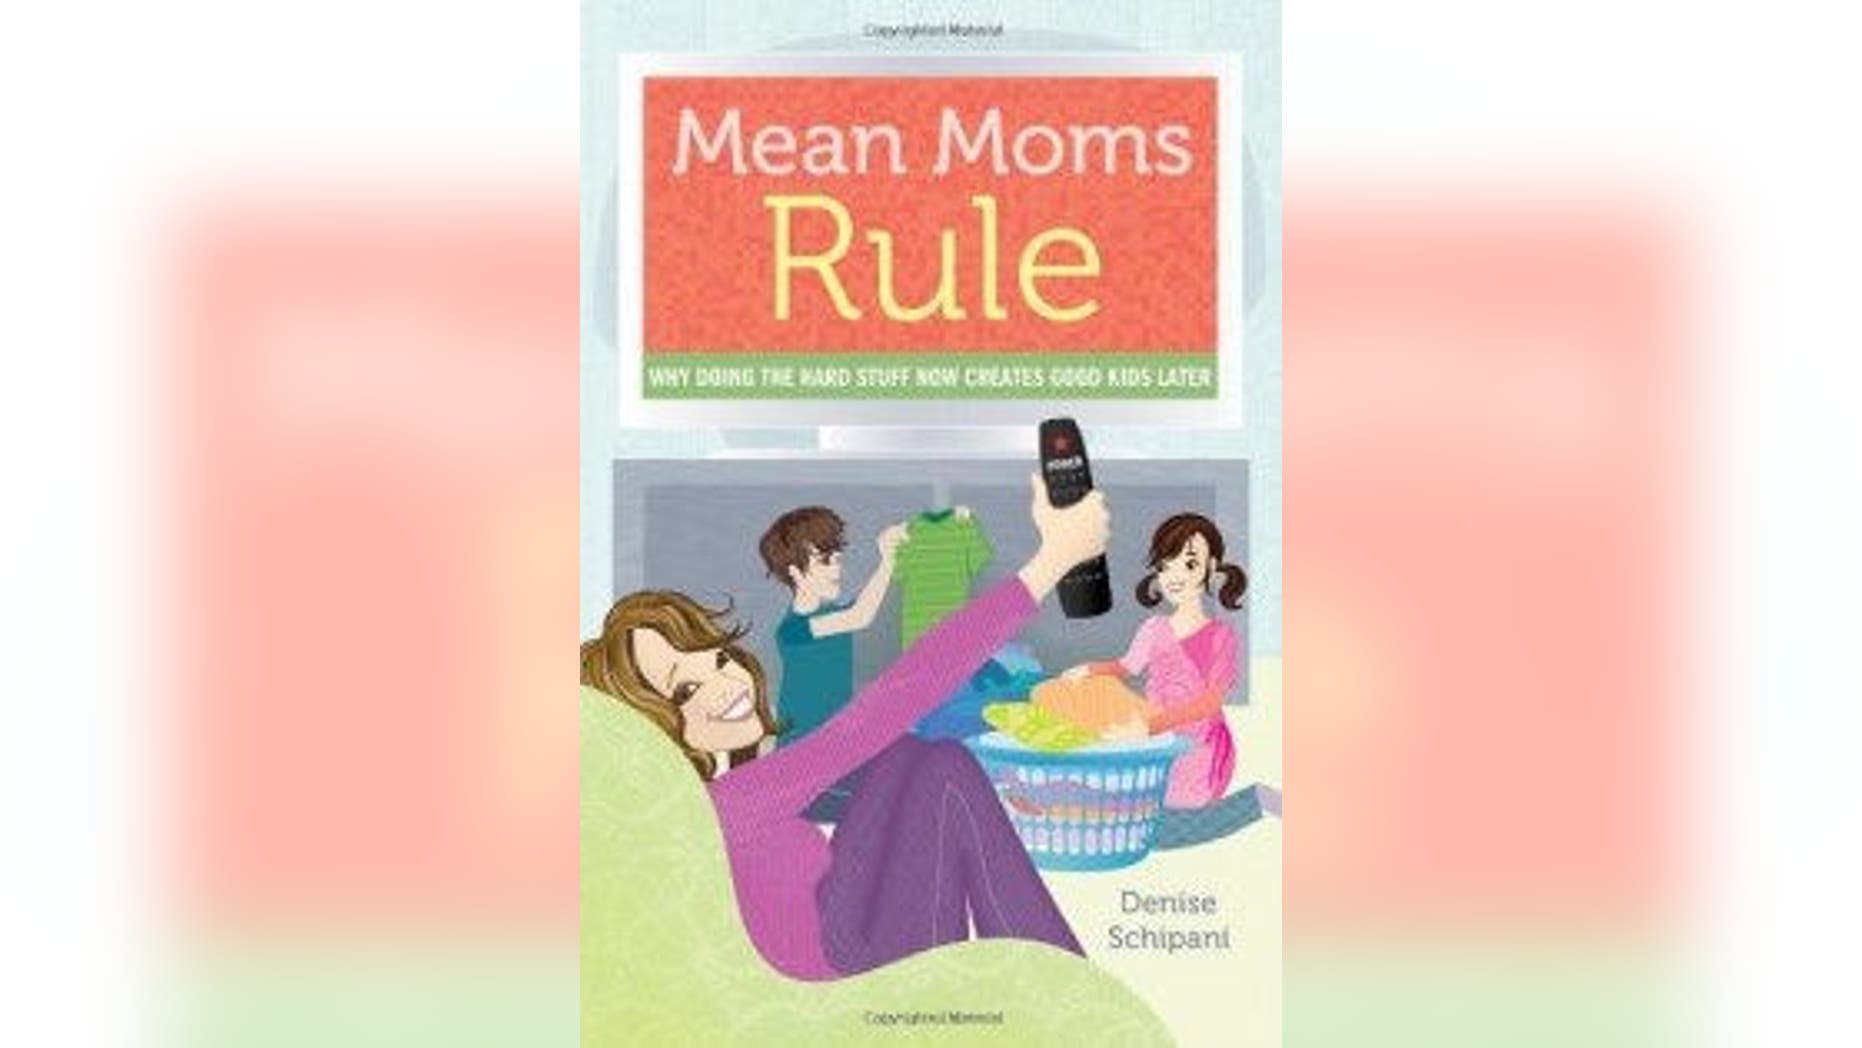 Mean Moms Rule By Denise Schipani Fox News 9188